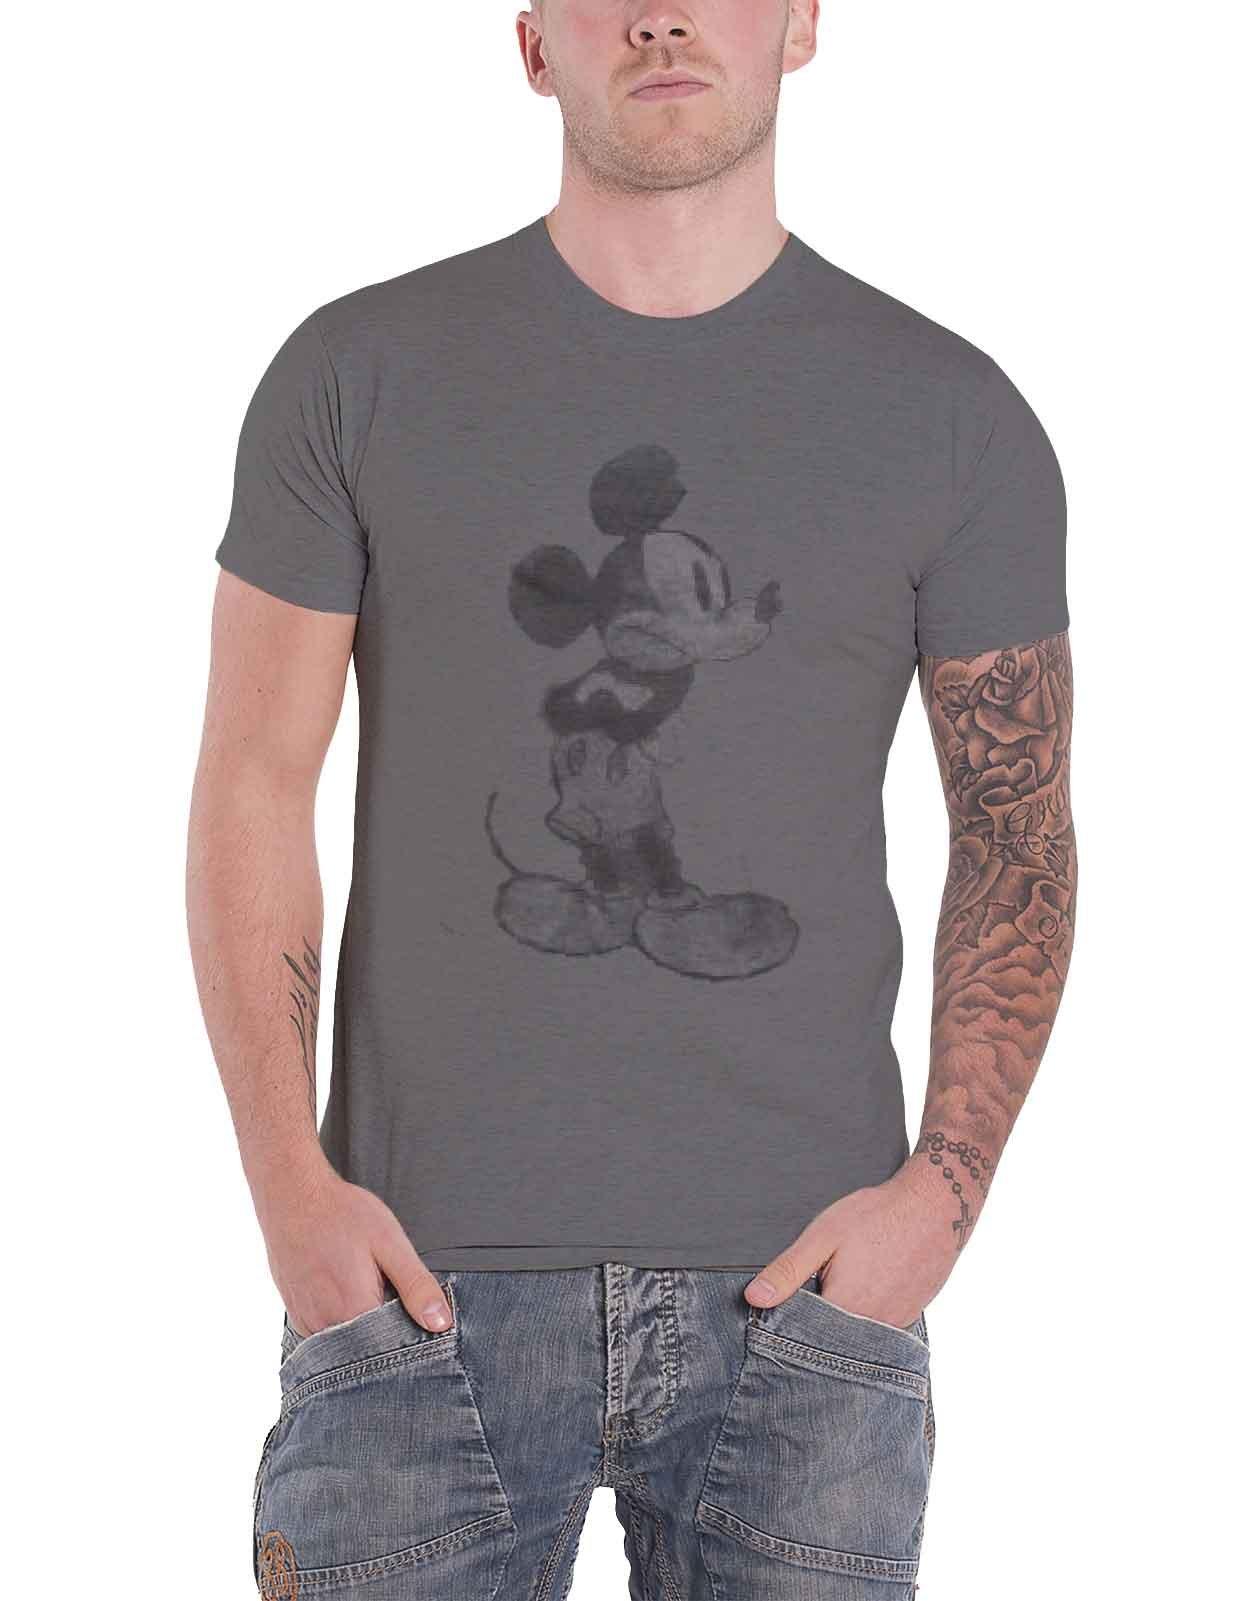 Винтажная футболка с изображением Микки Мауса Disney, серый винтажная футболка с микки маусом disney серый